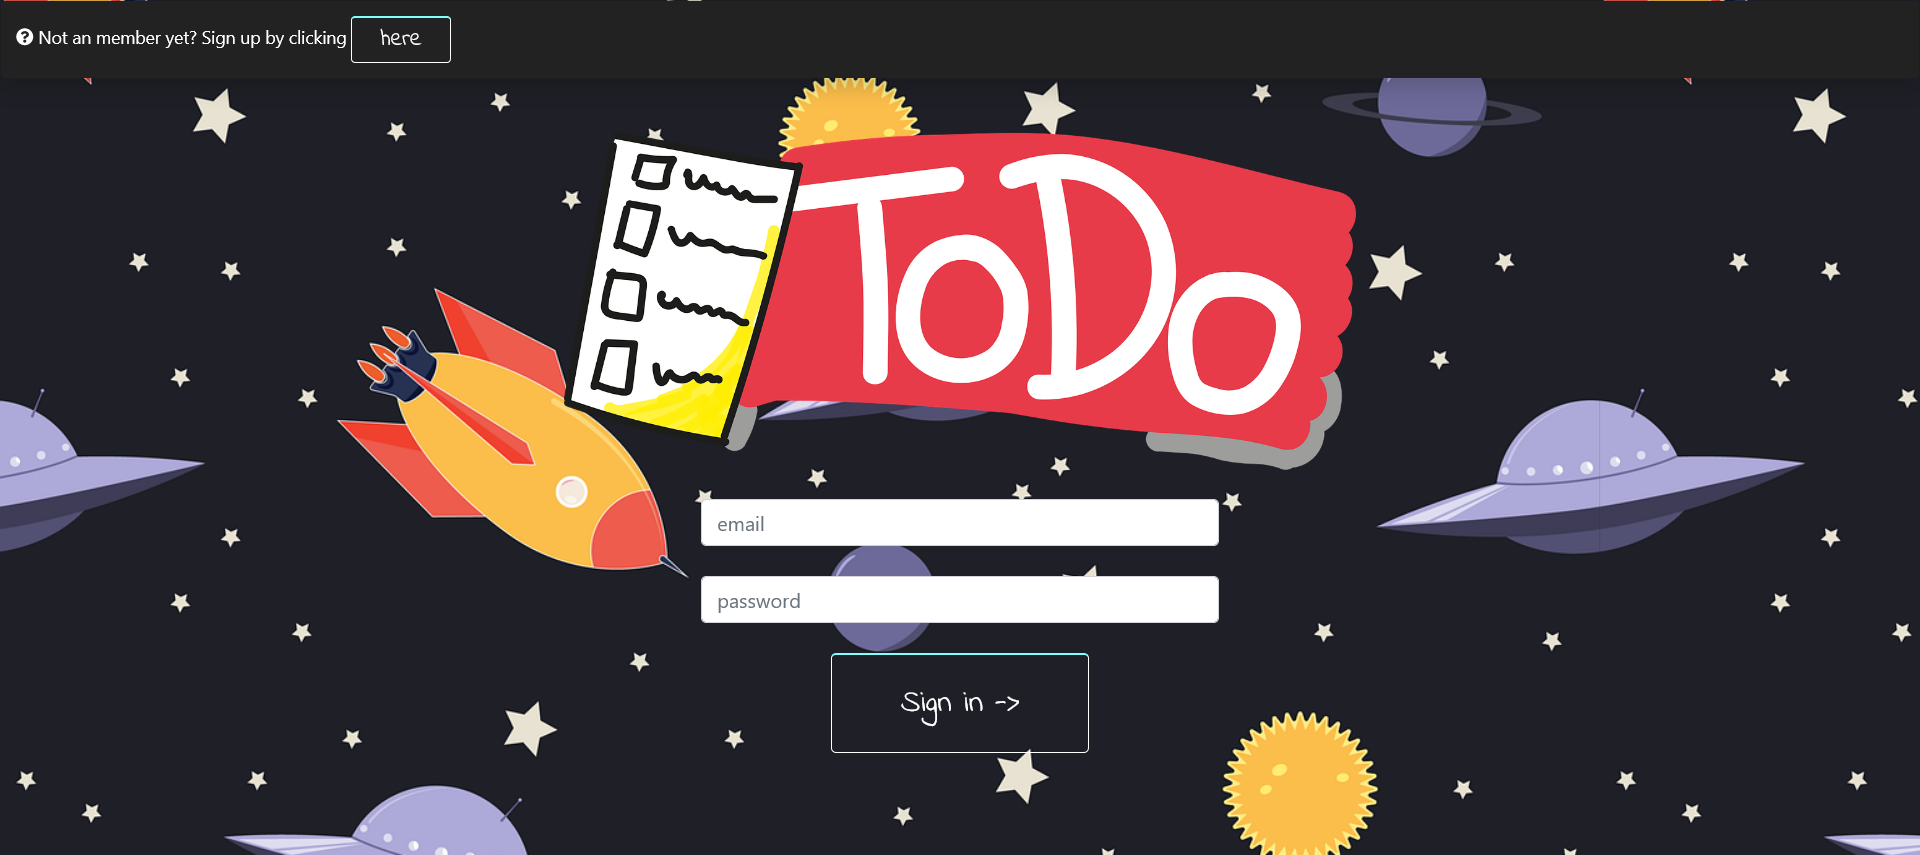 Tonodedo app image 1